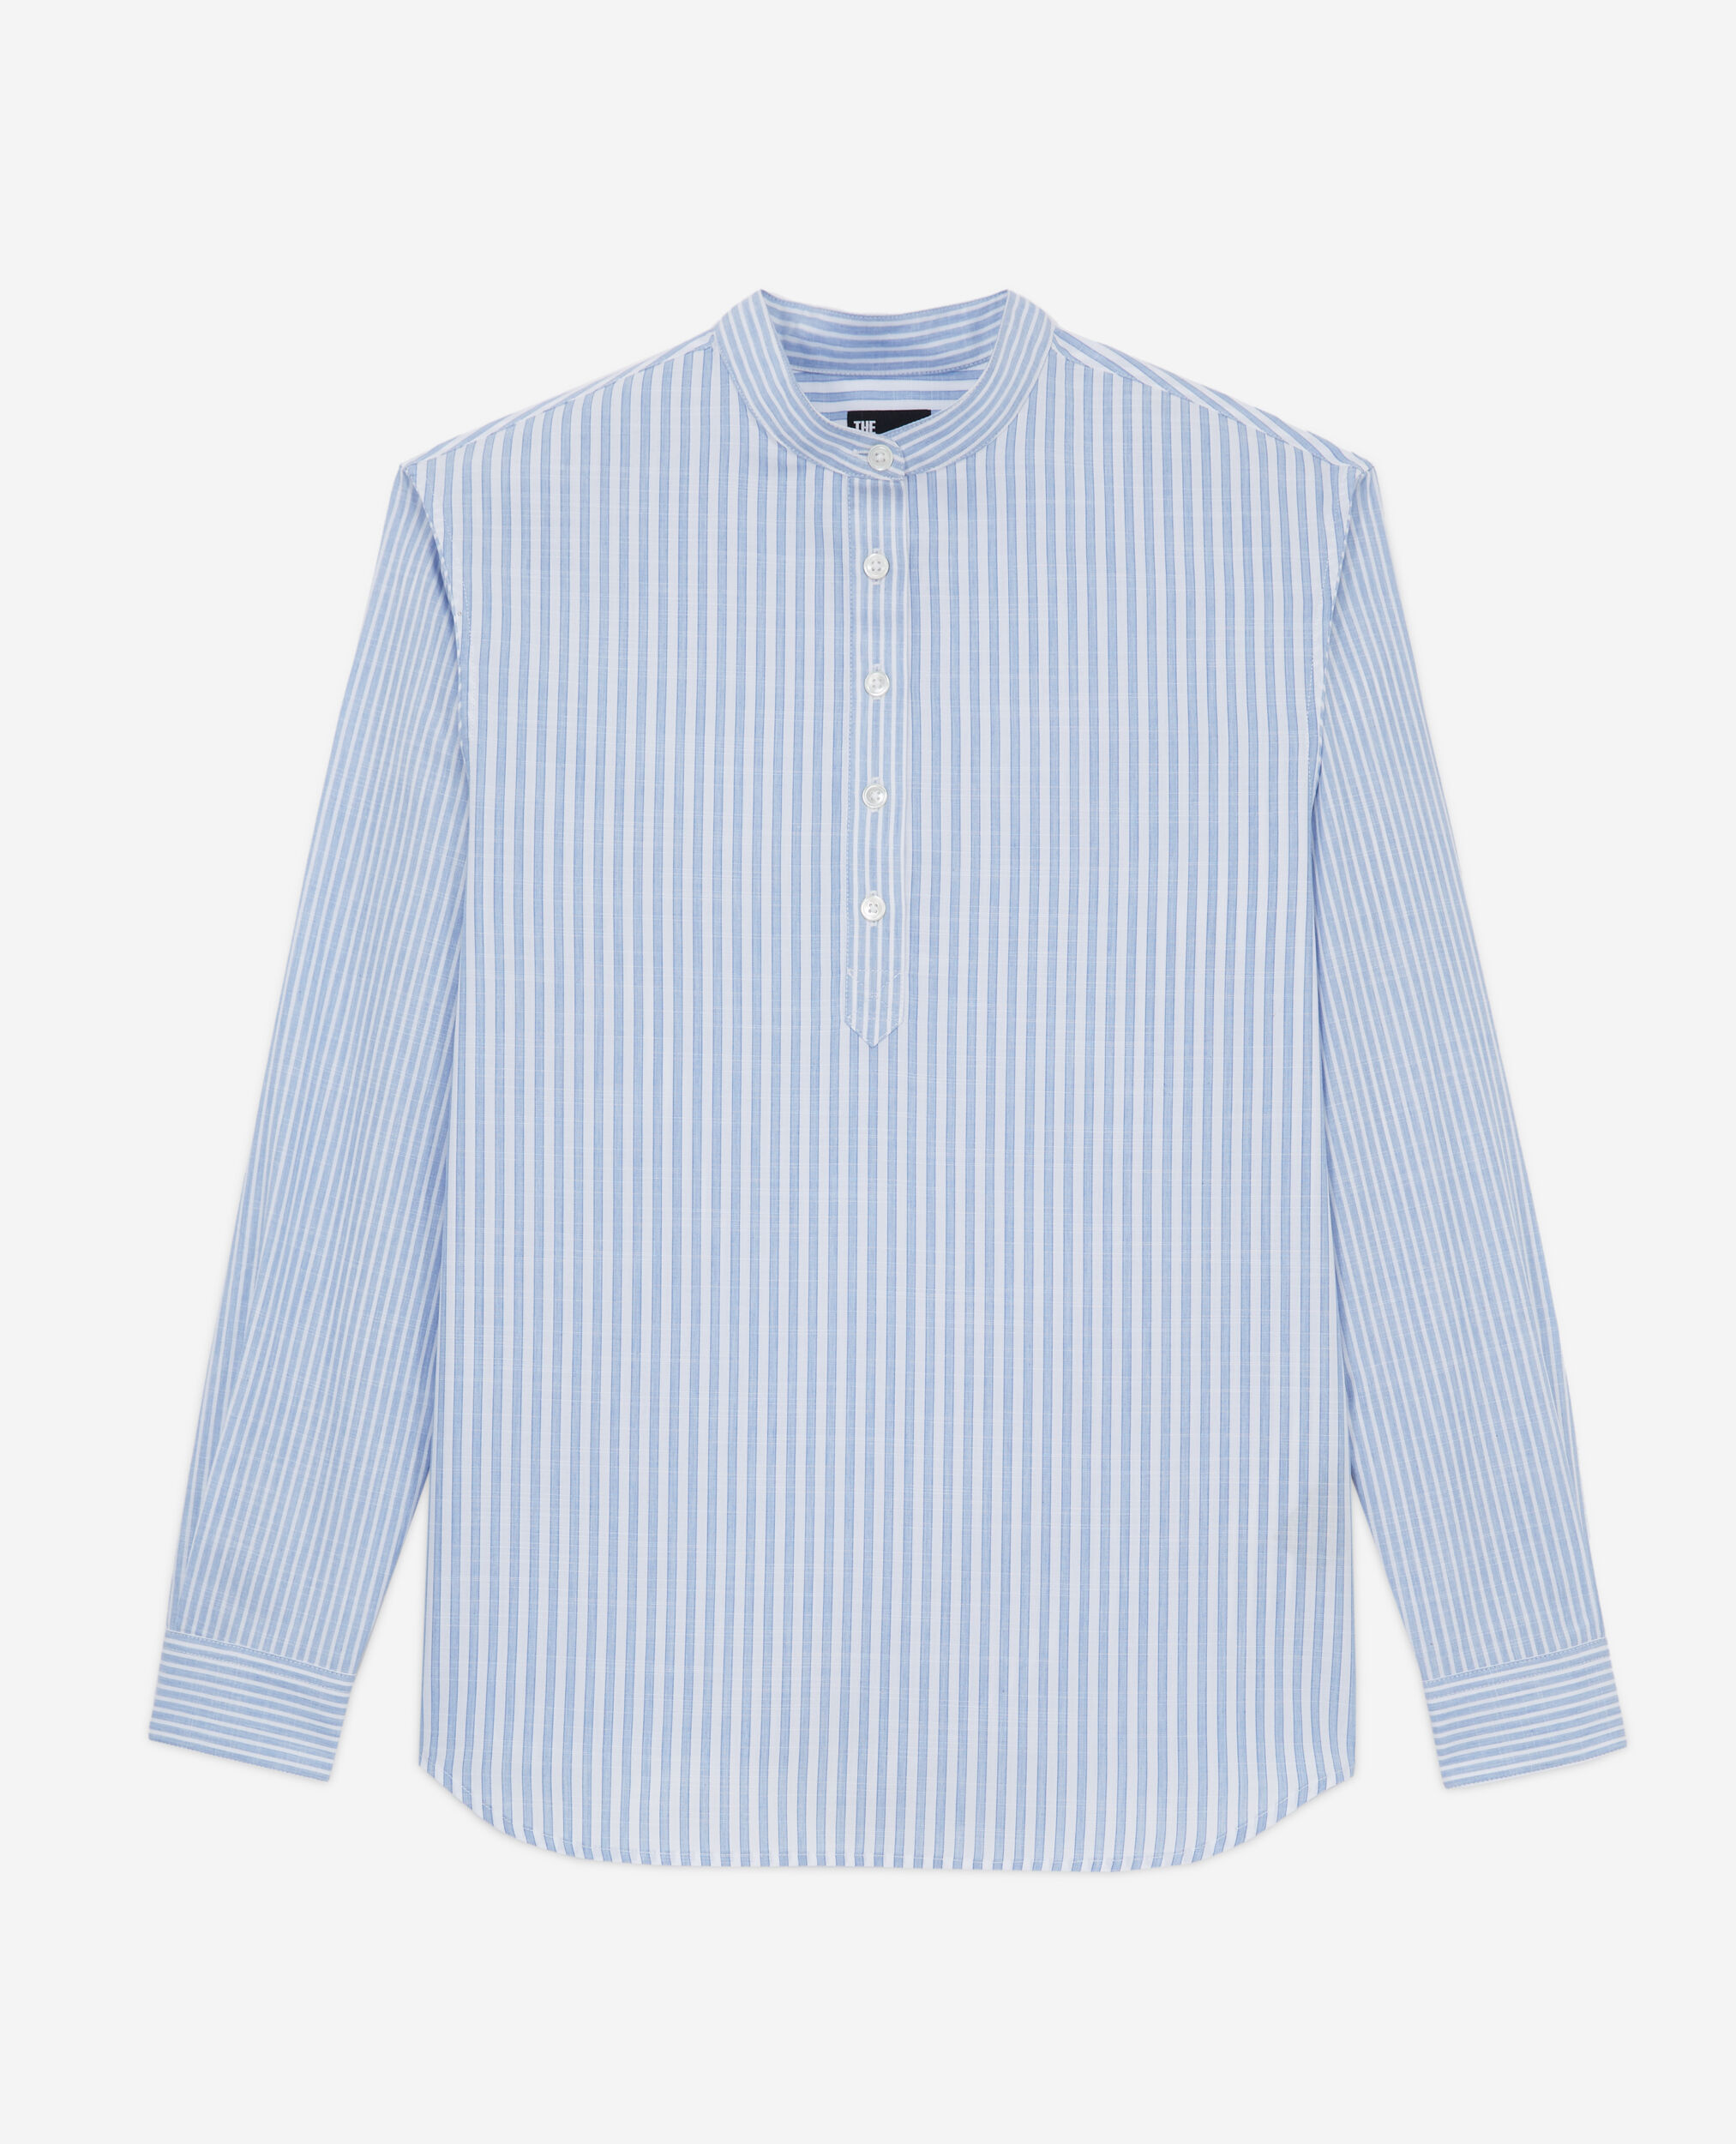 Blue striped shirt, BLUE WHITE, hi-res image number null